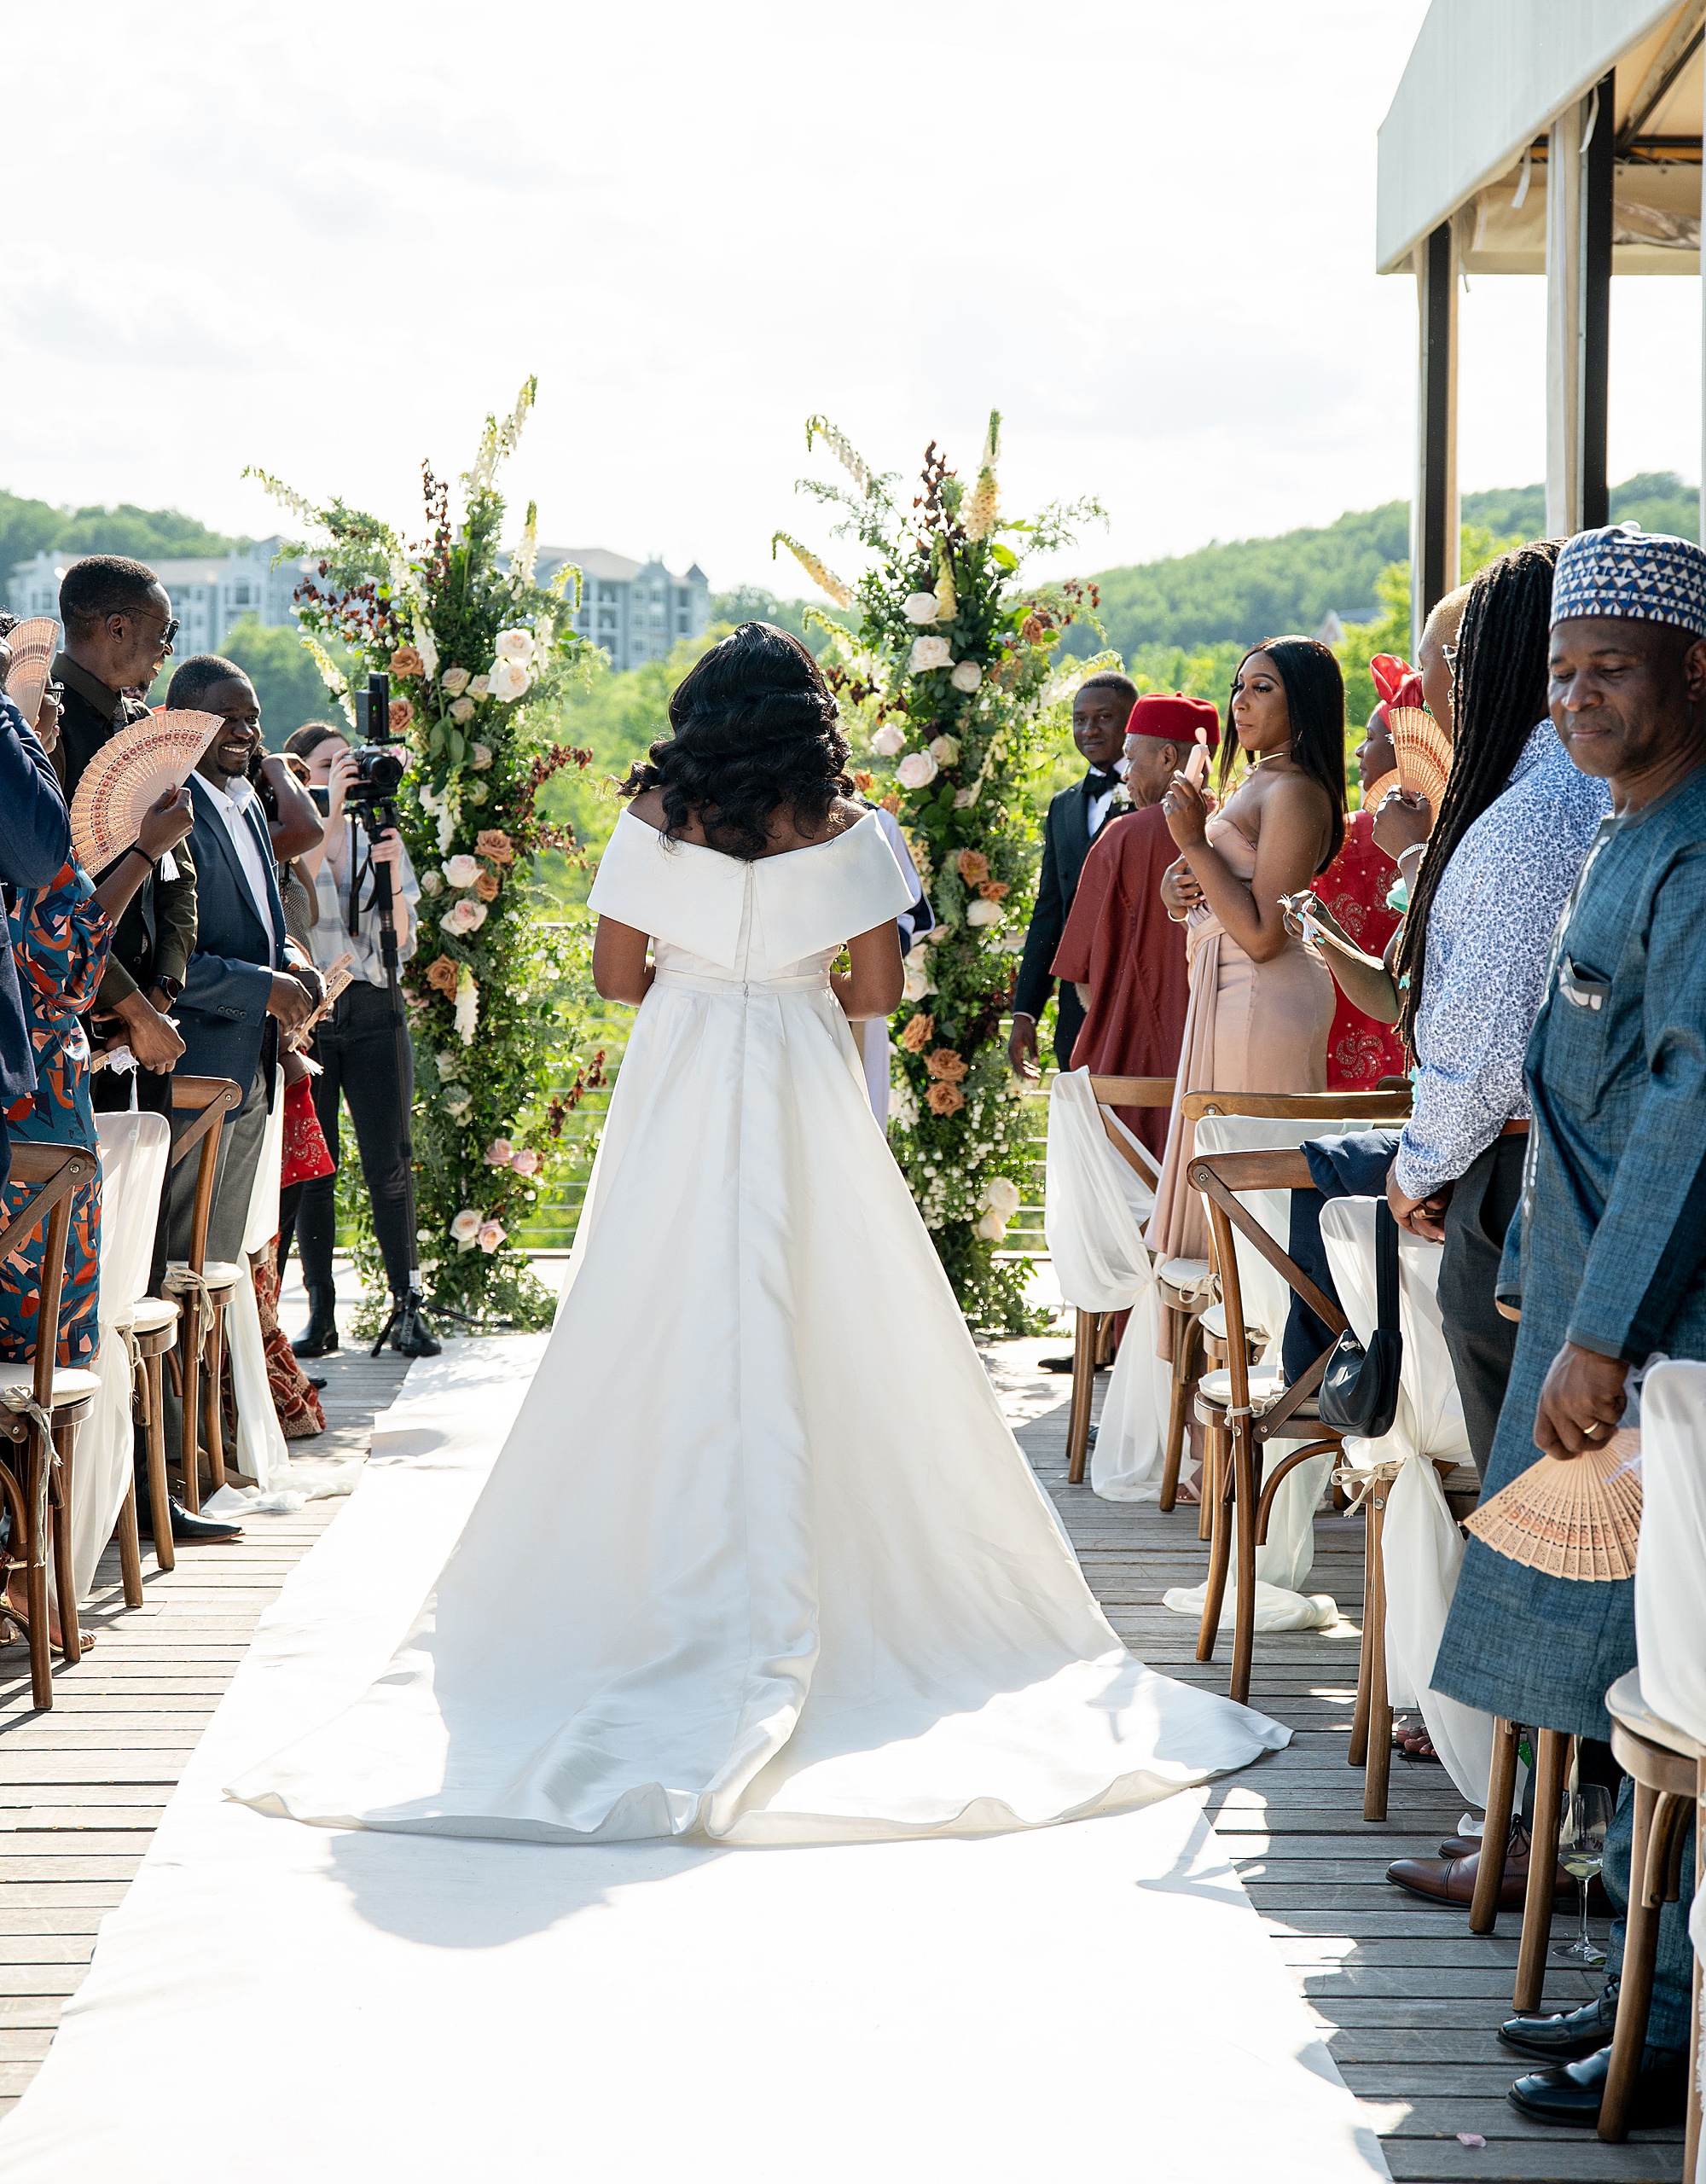 bride walks down aisle in classic wedding gown